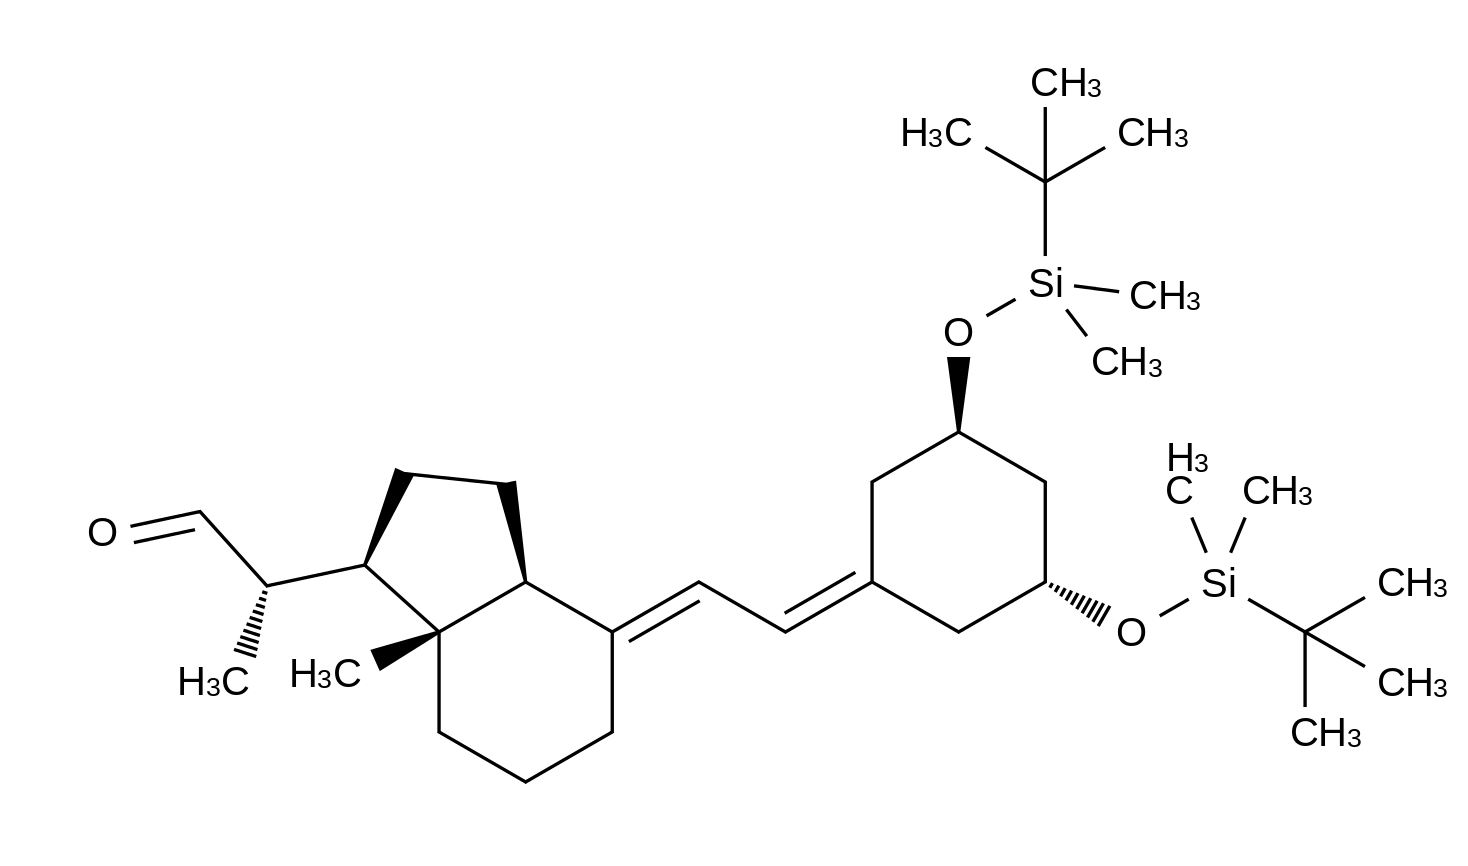 1,3-Di-O-tert-butyldimethylsilyl Paricalcitol 18-Aldehyde